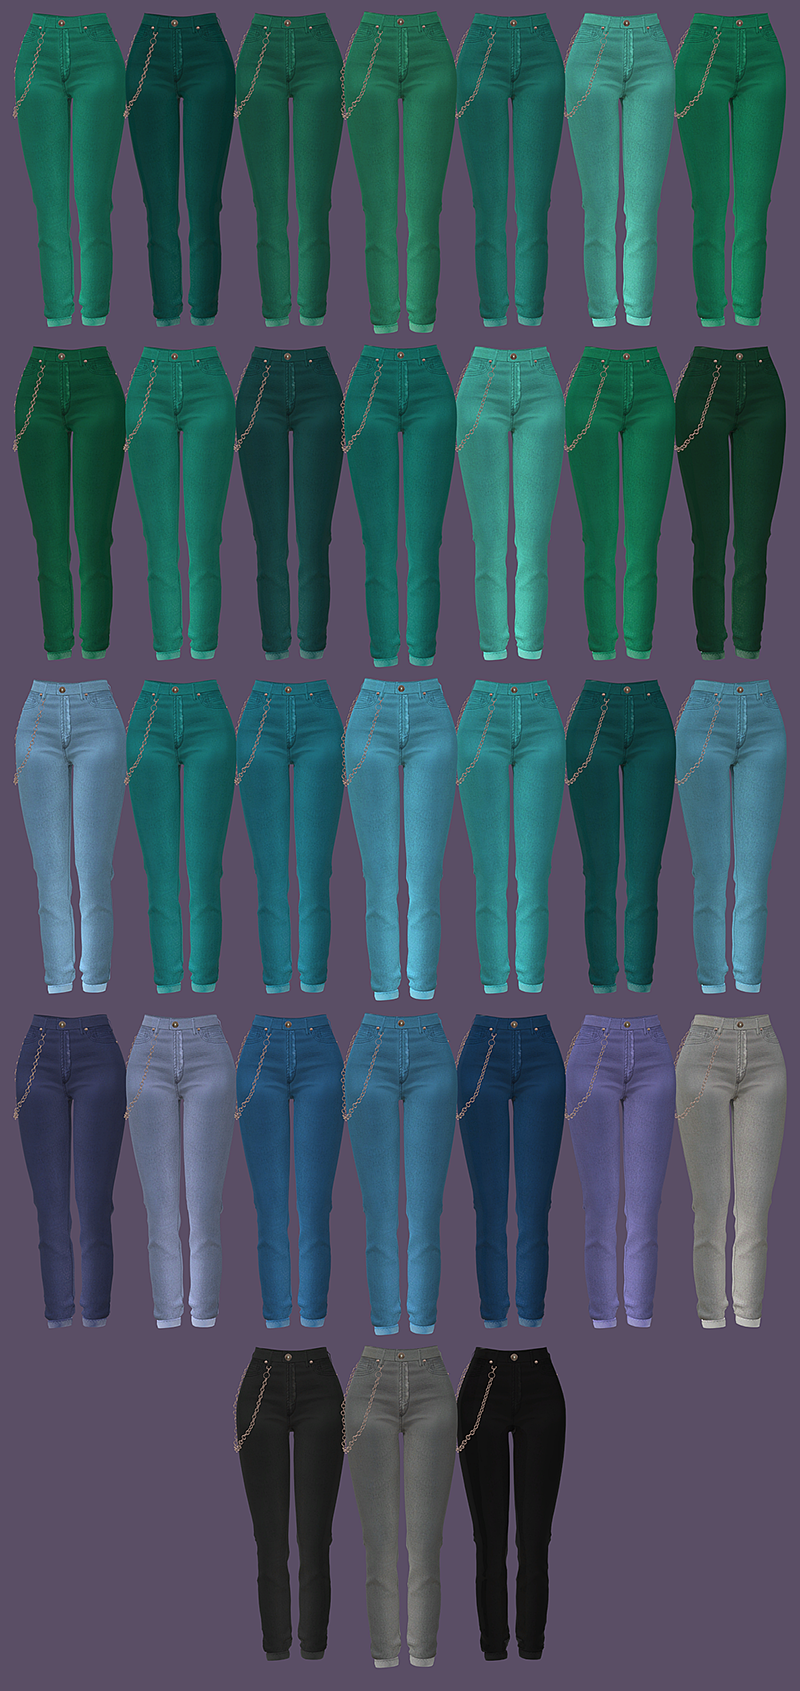 Monika Set - The Sims 4 Catalog